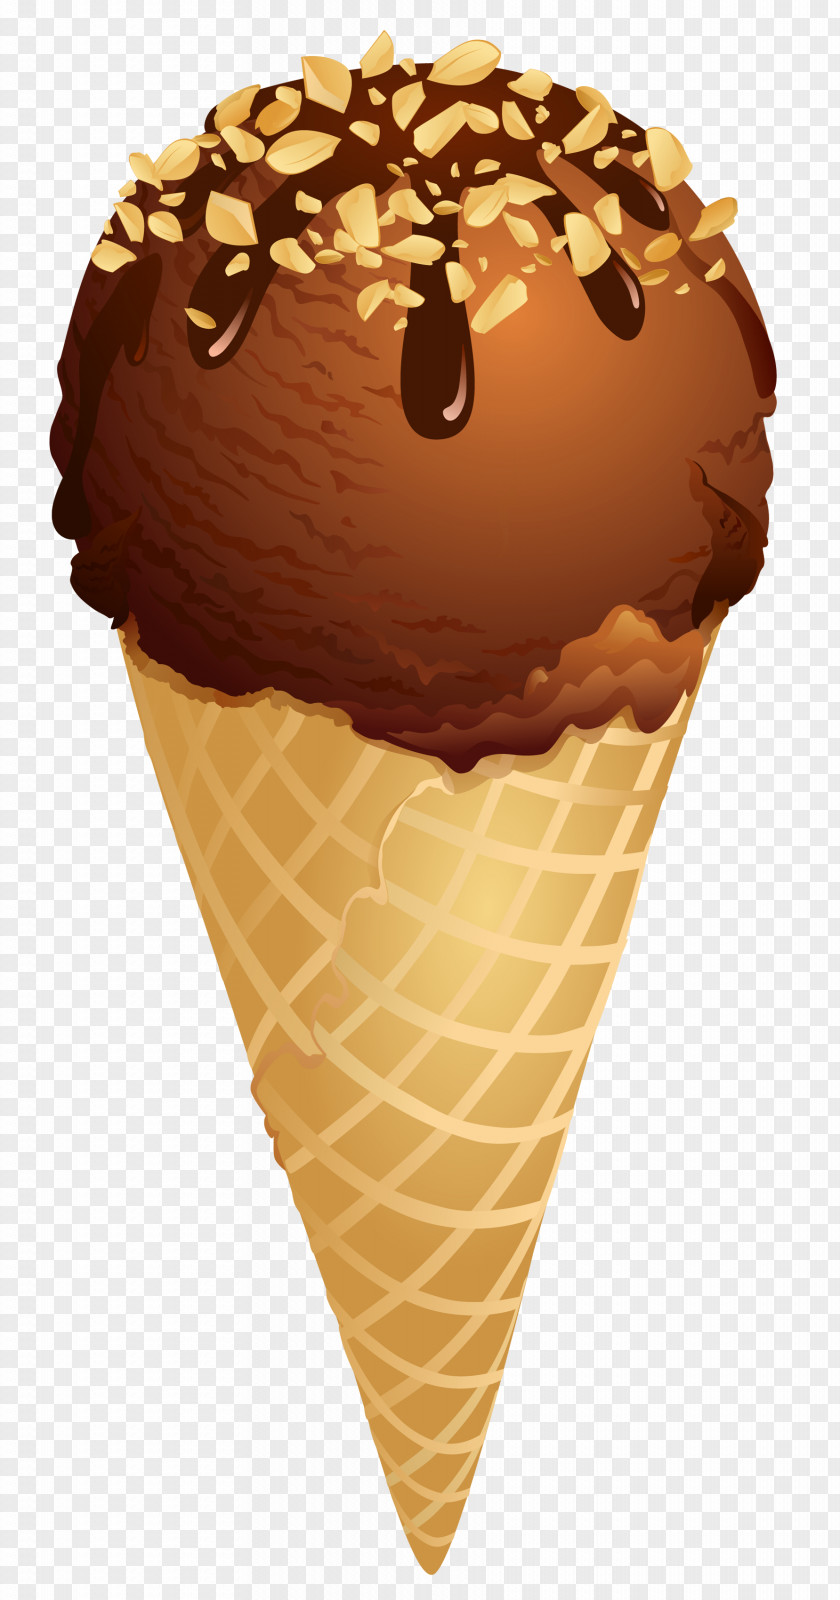 Ice Cream Cone File Chocolate Sundae PNG